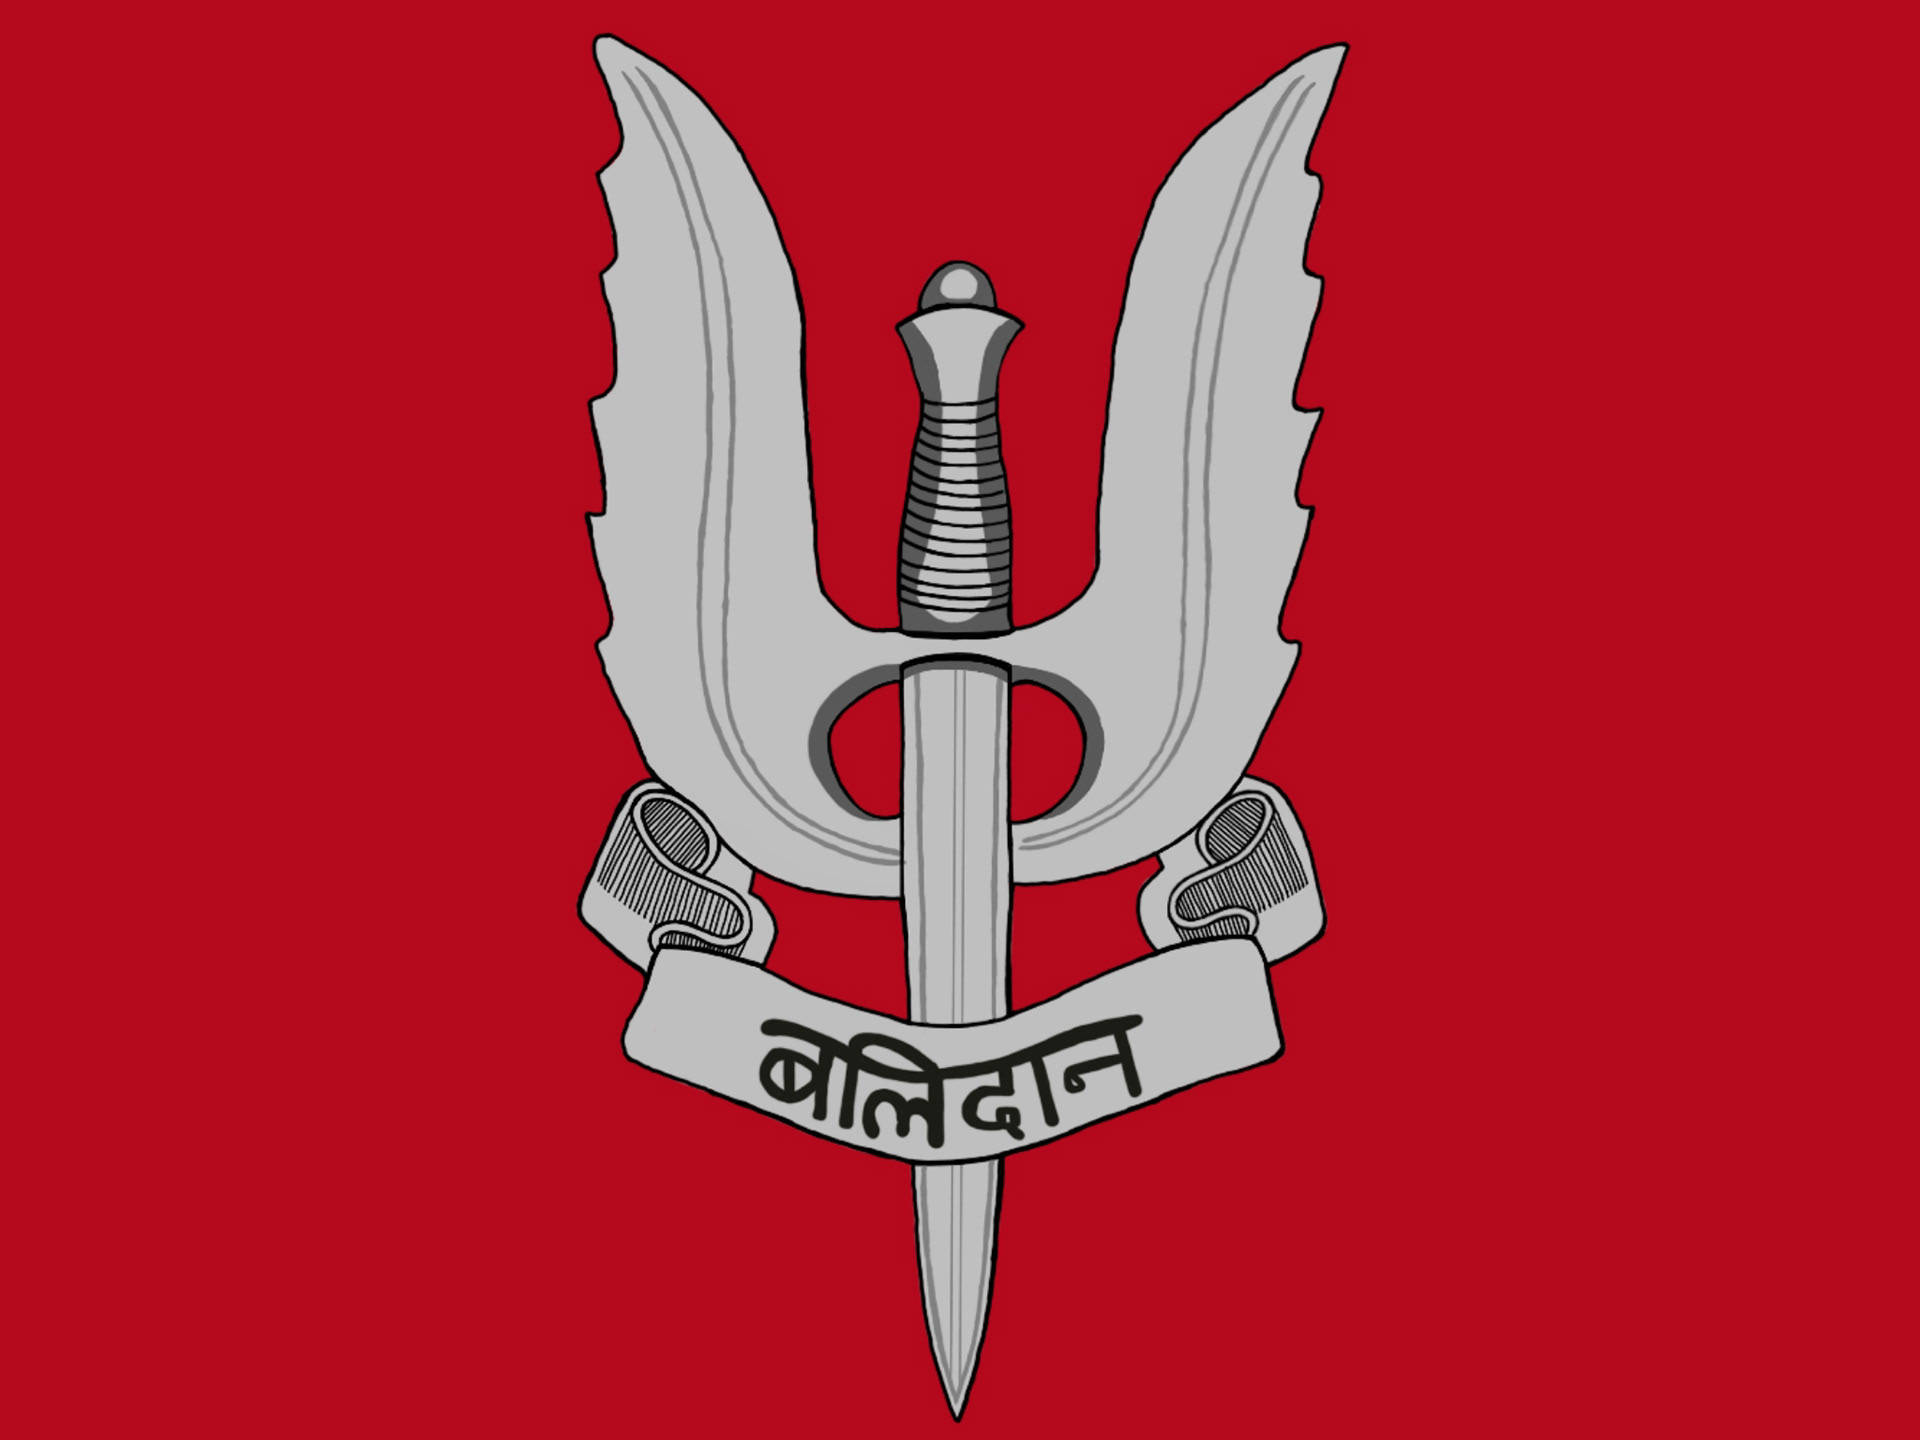 Gray Balidan Badge In Red Backdrop